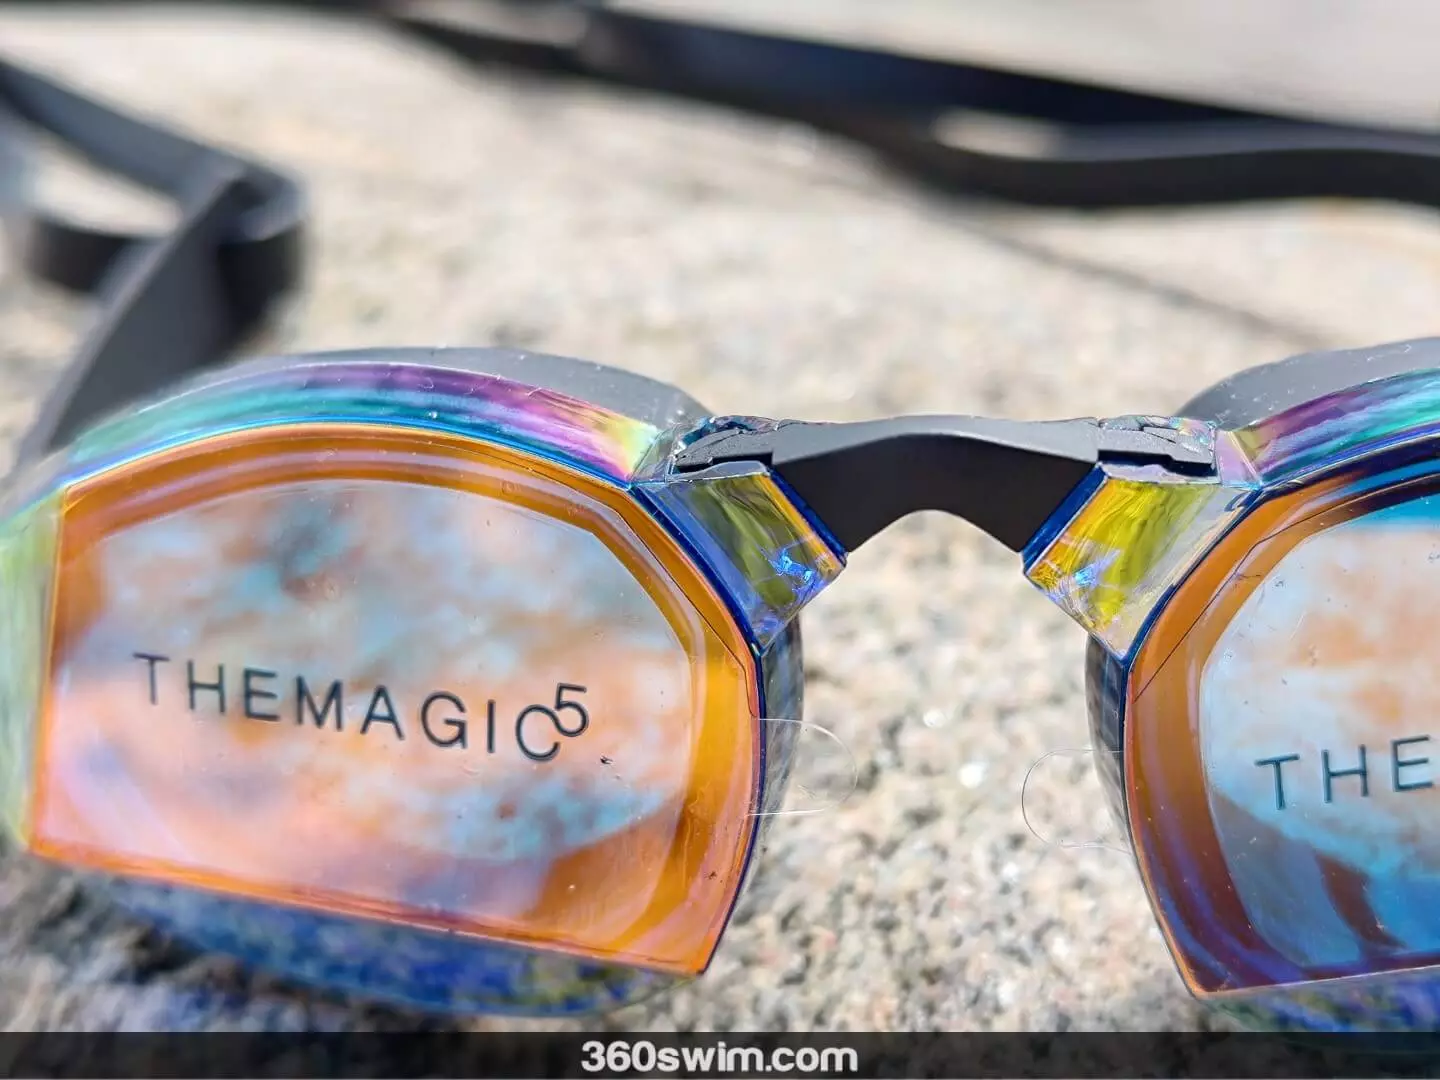 TheMagic5 custom goggles